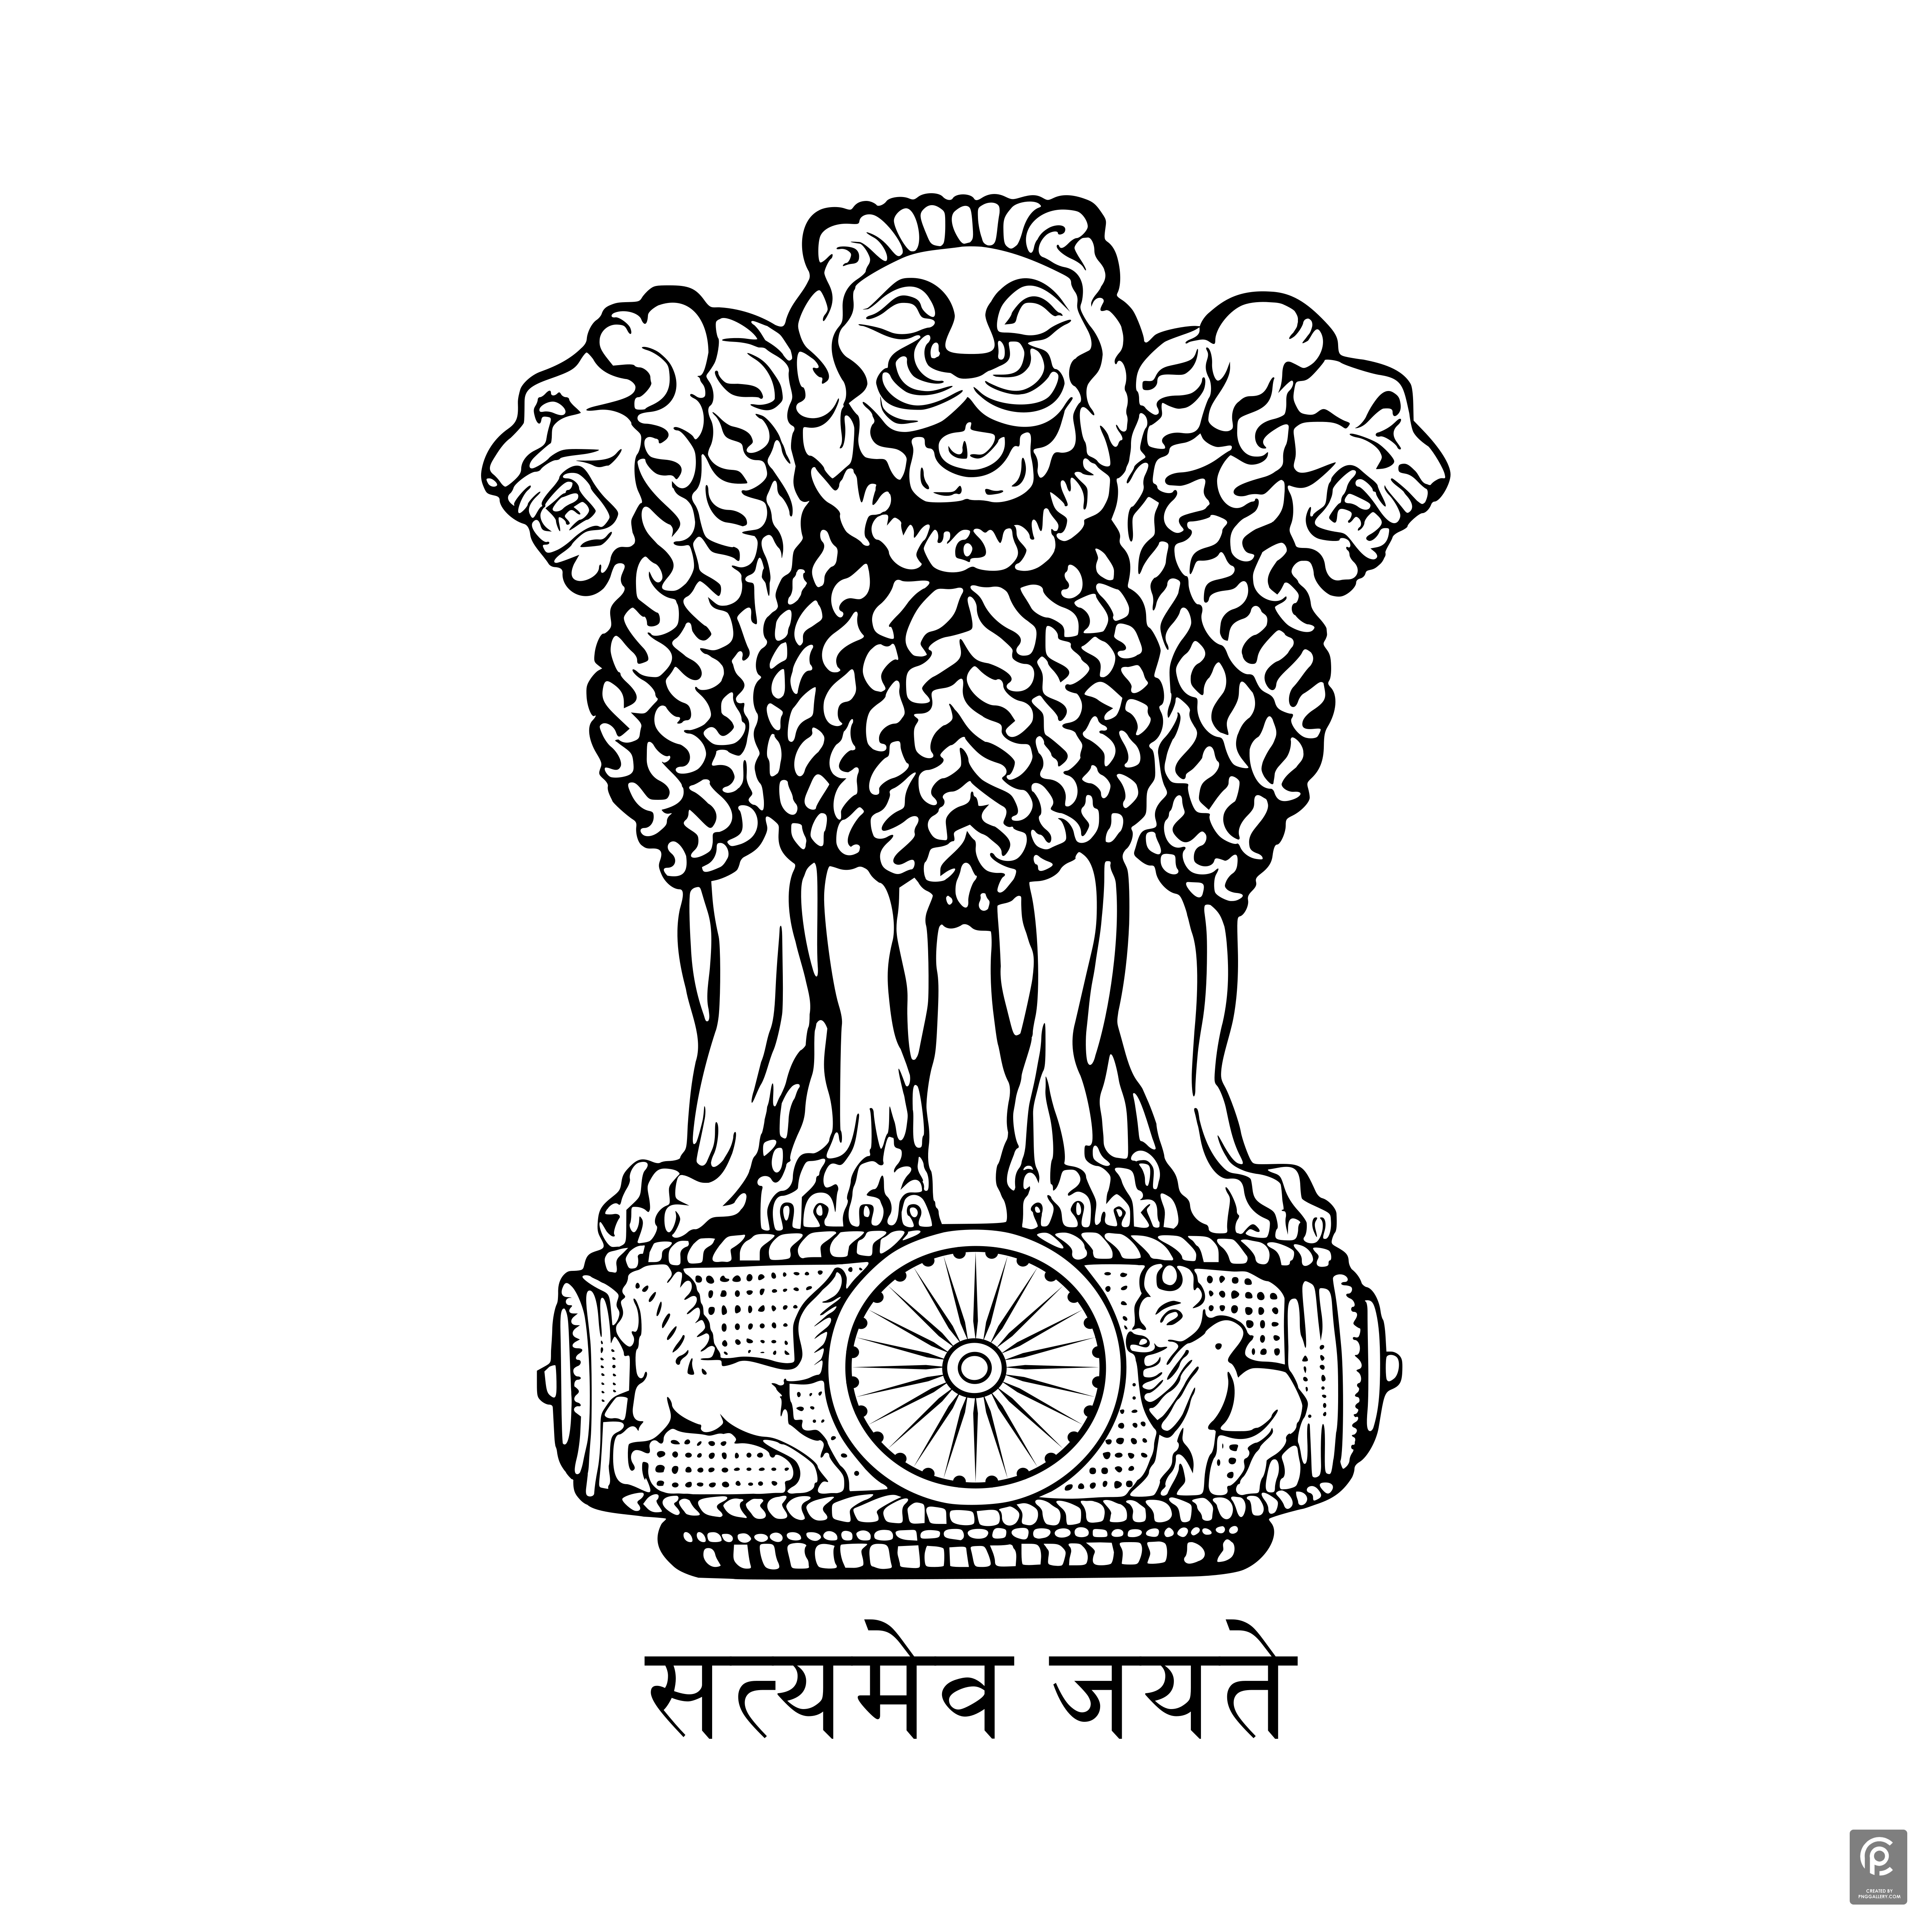 Emblem of India Logo Transparent Gallery